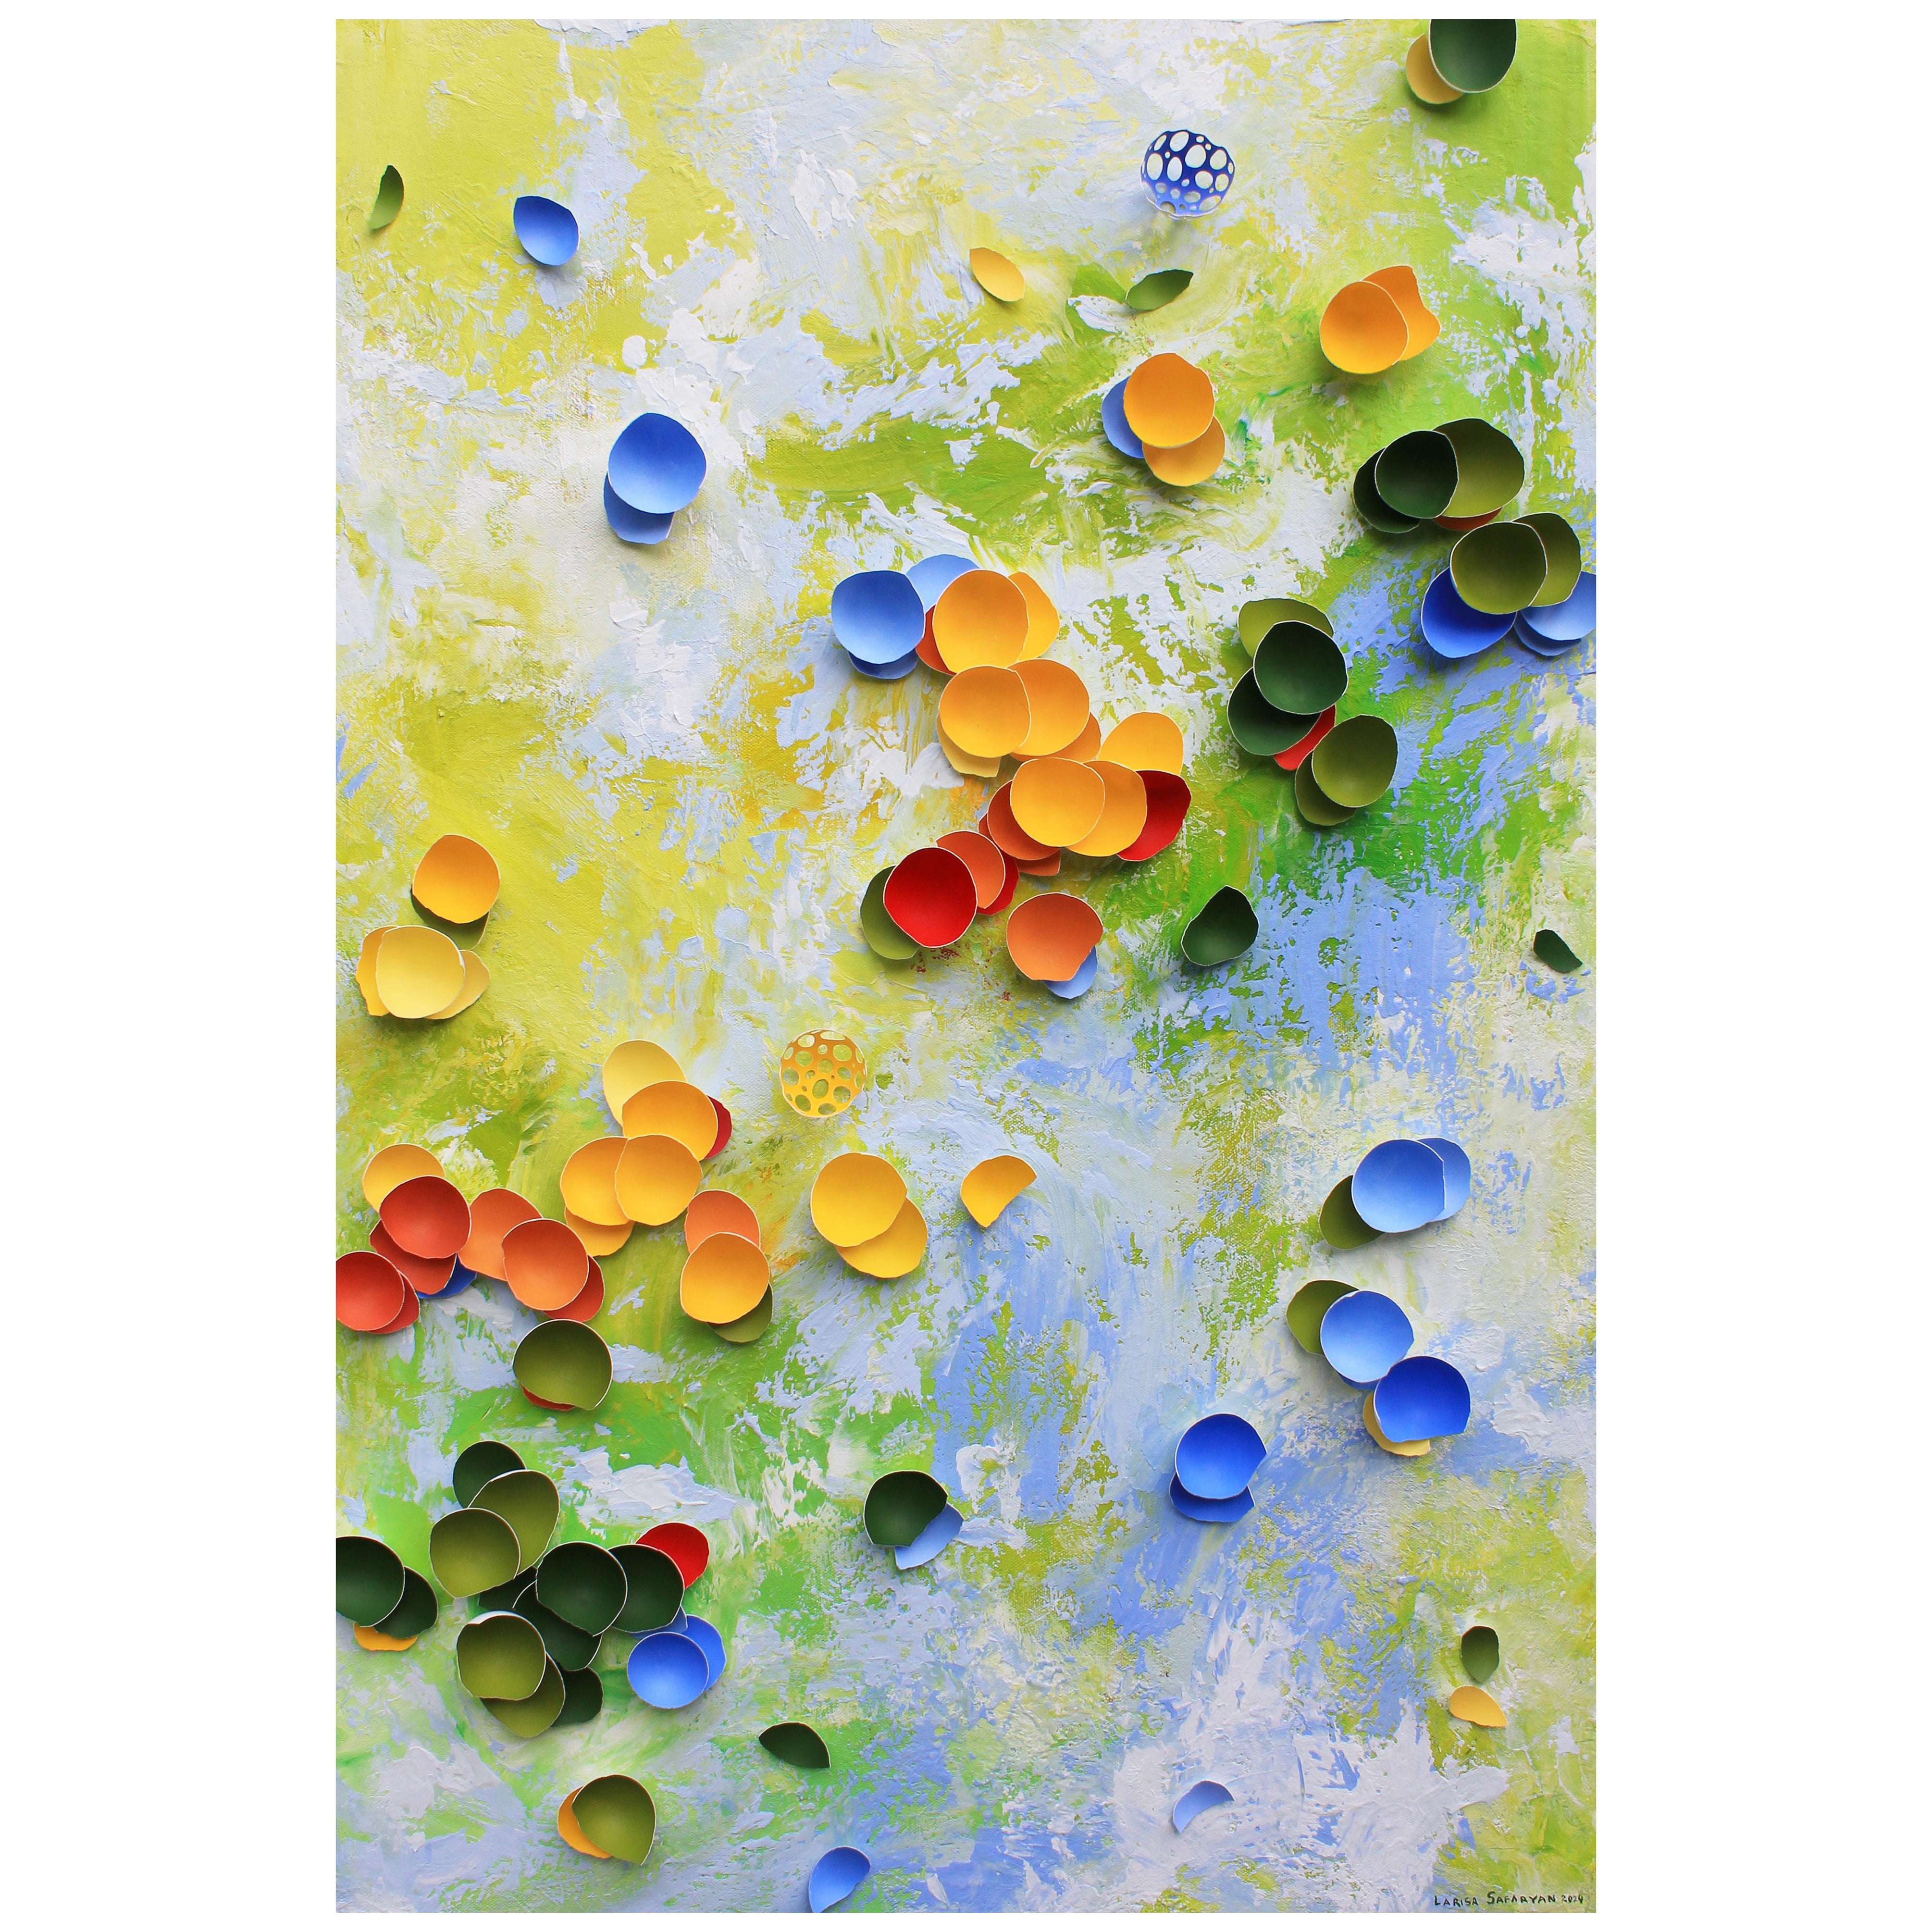 Eternal Spring by Larisa Safaryan  Acrylic paint and eggshells on canvas